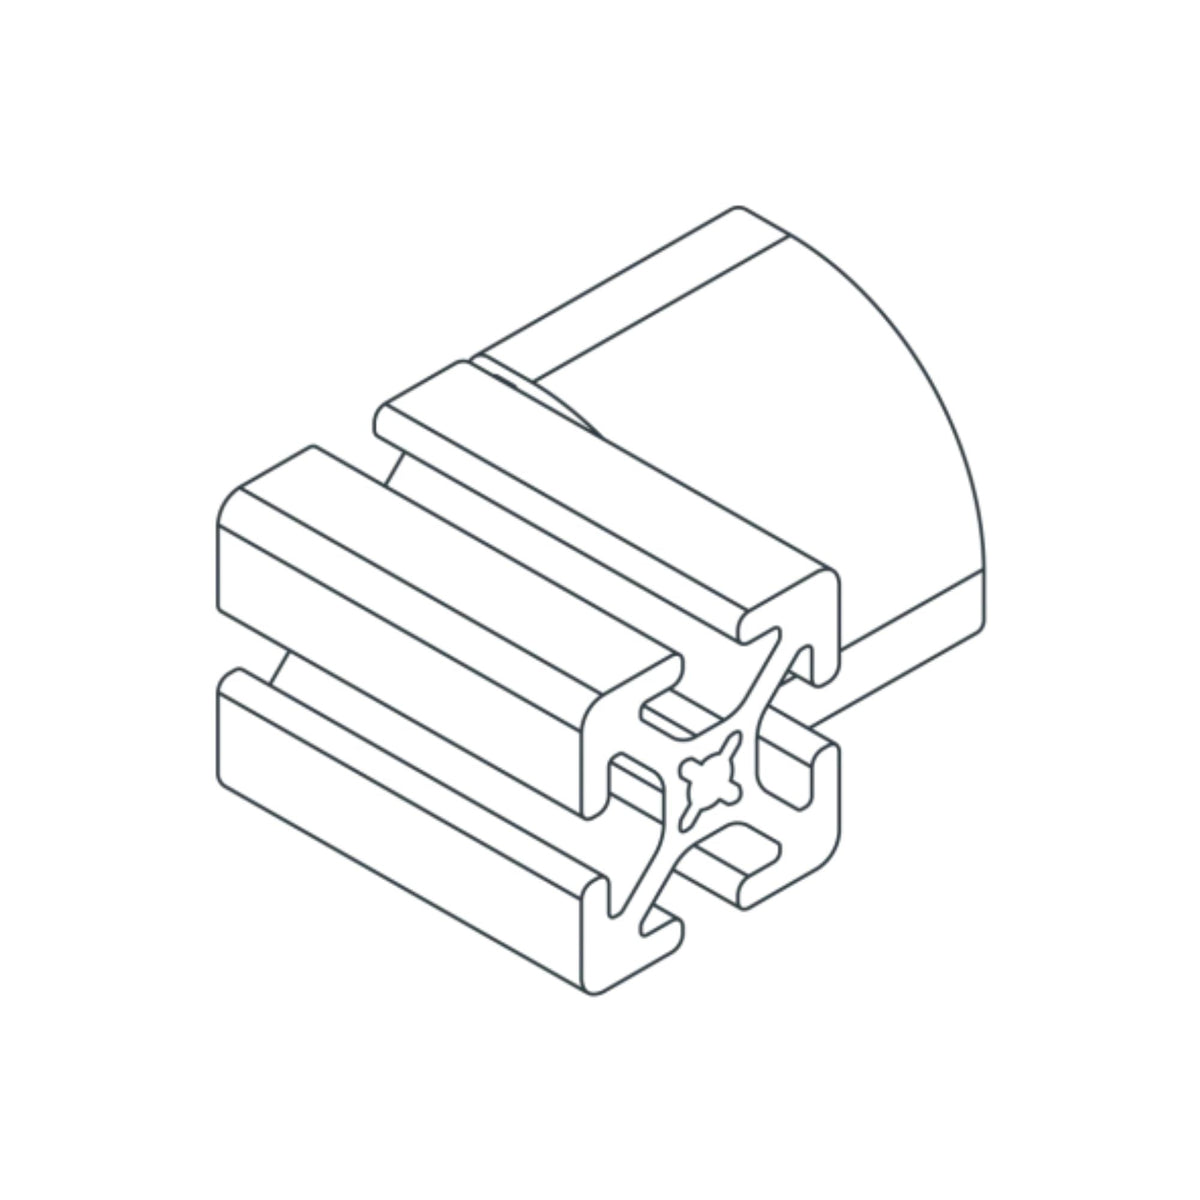 diagram of a fastener clip